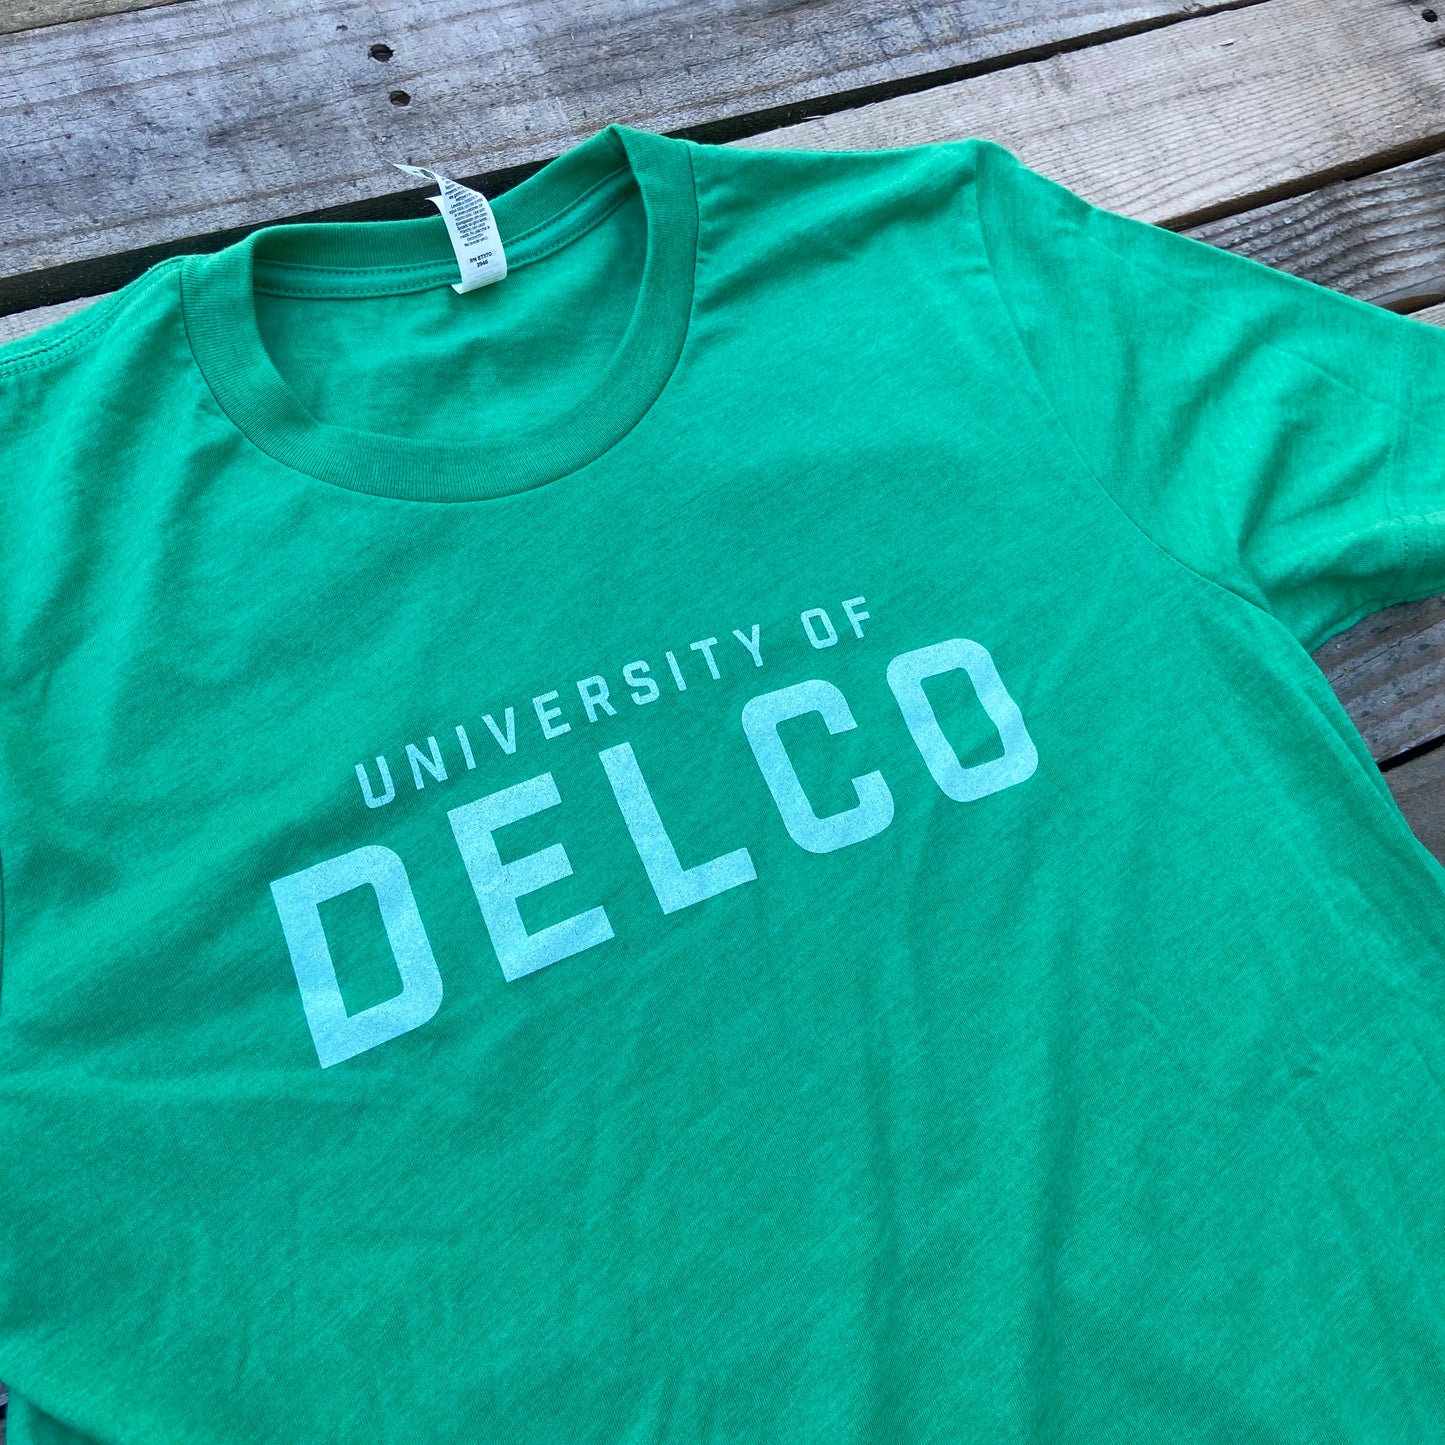 University of DELCO Green